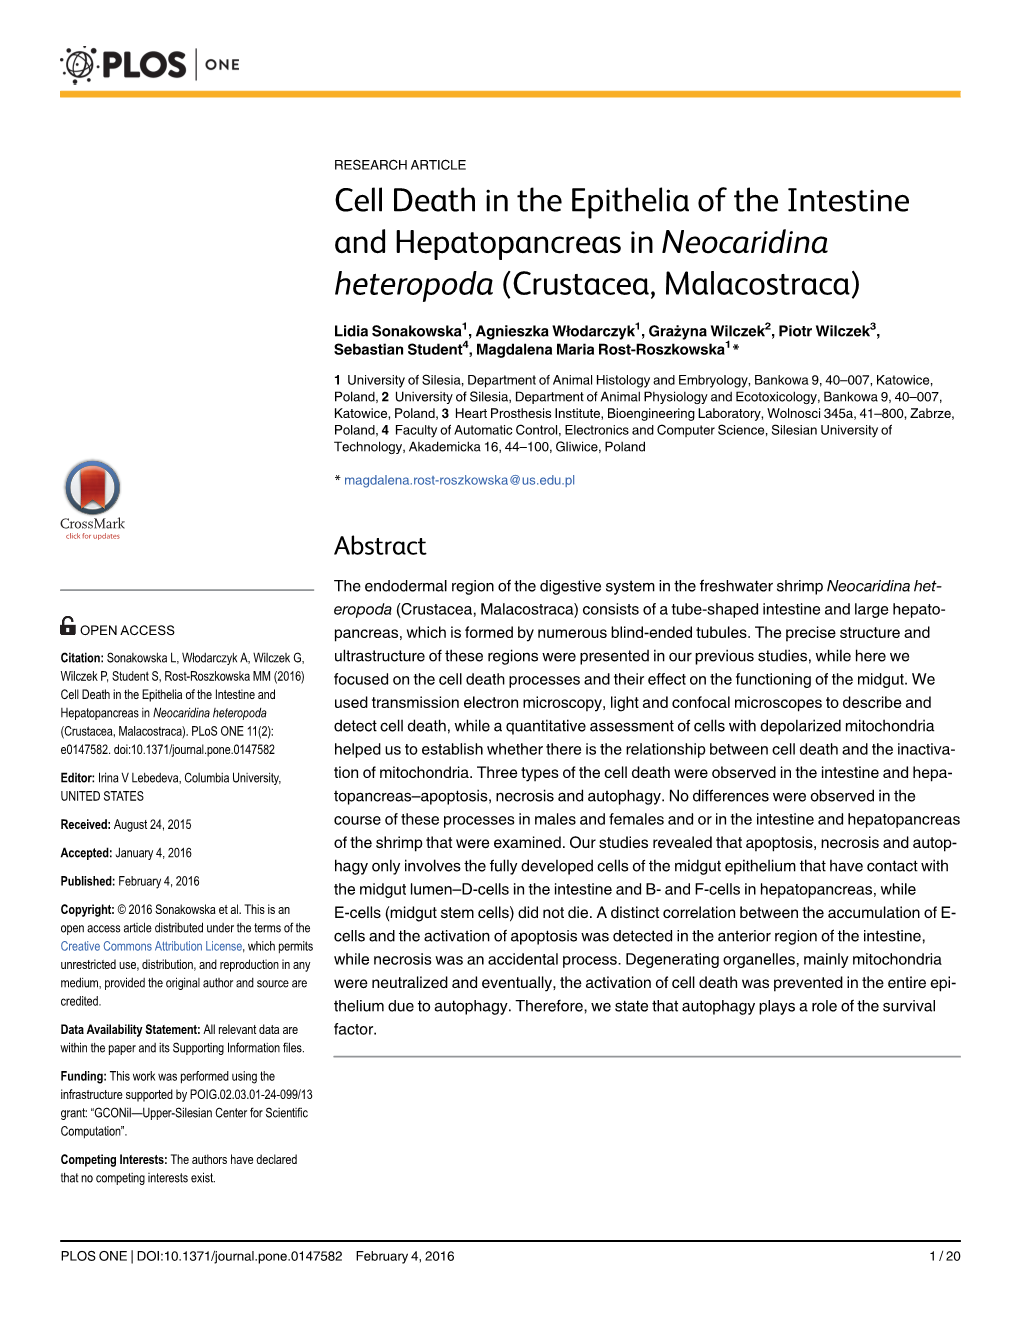 Cell Death in the Epithelia of the Intestine and Hepatopancreas in Neocaridina Heteropoda (Crustacea, Malacostraca)